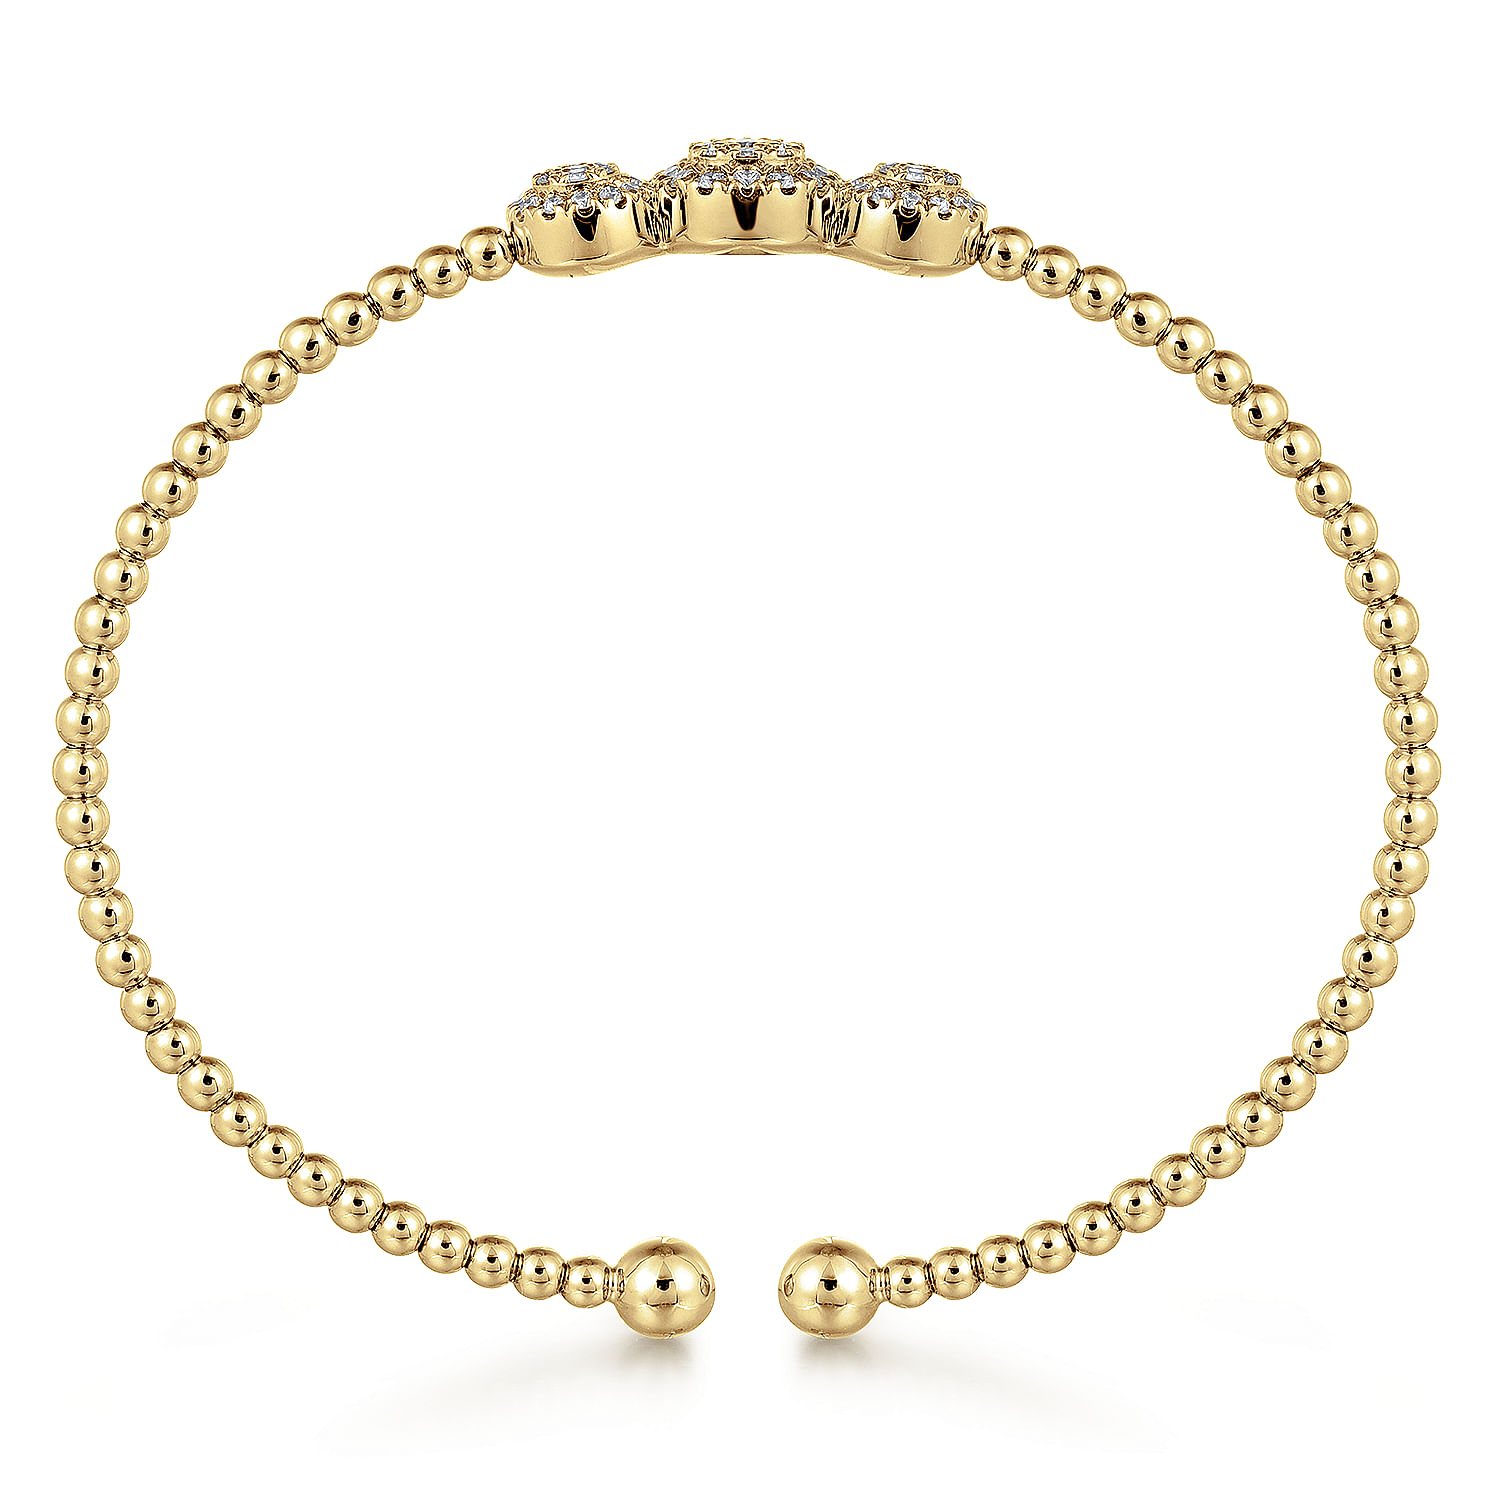 14K Yellow Gold Bujukan Bead Cuff Bracelet with Three Pavé Diamond Stations